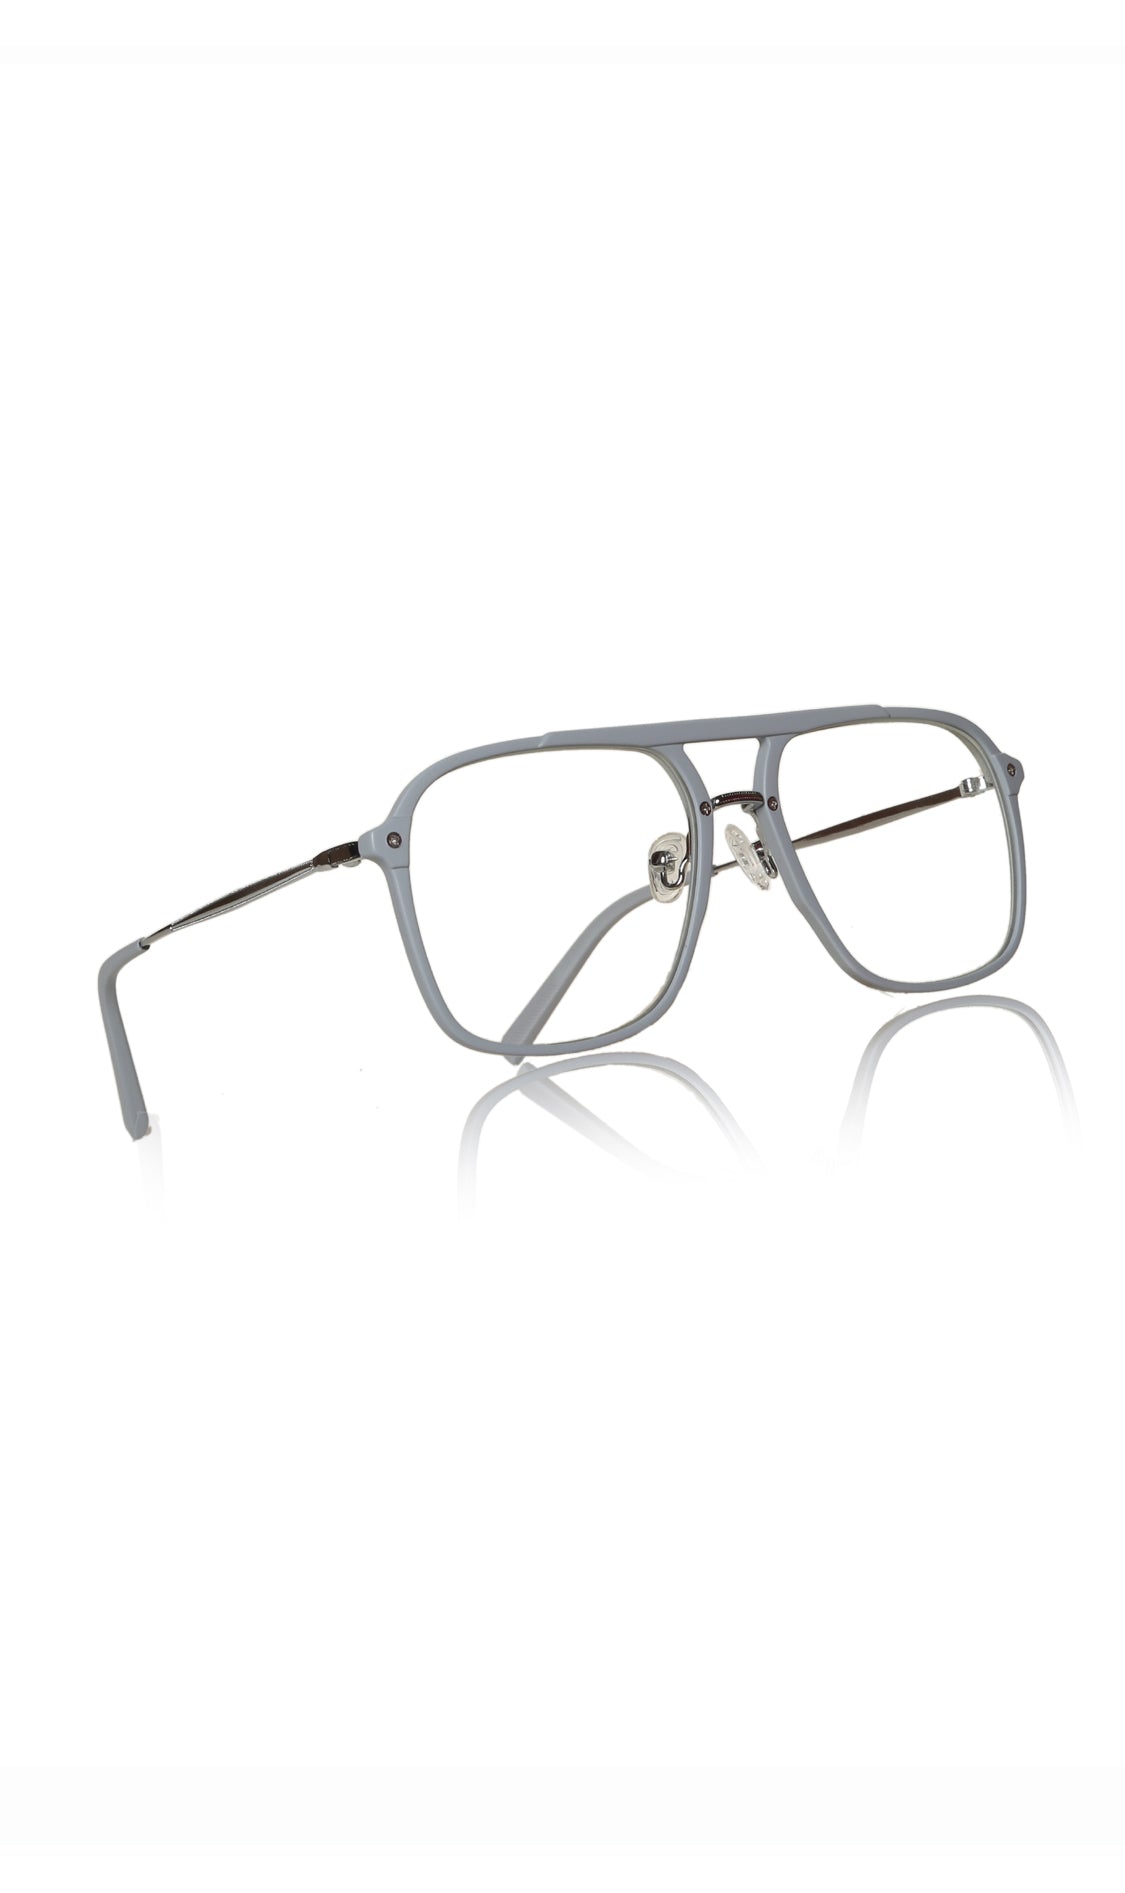 Jodykoes® Premium Series Double Bar Eyewear Eyeglasses Spectacles Frame for Men and Women (Flagship Grey)